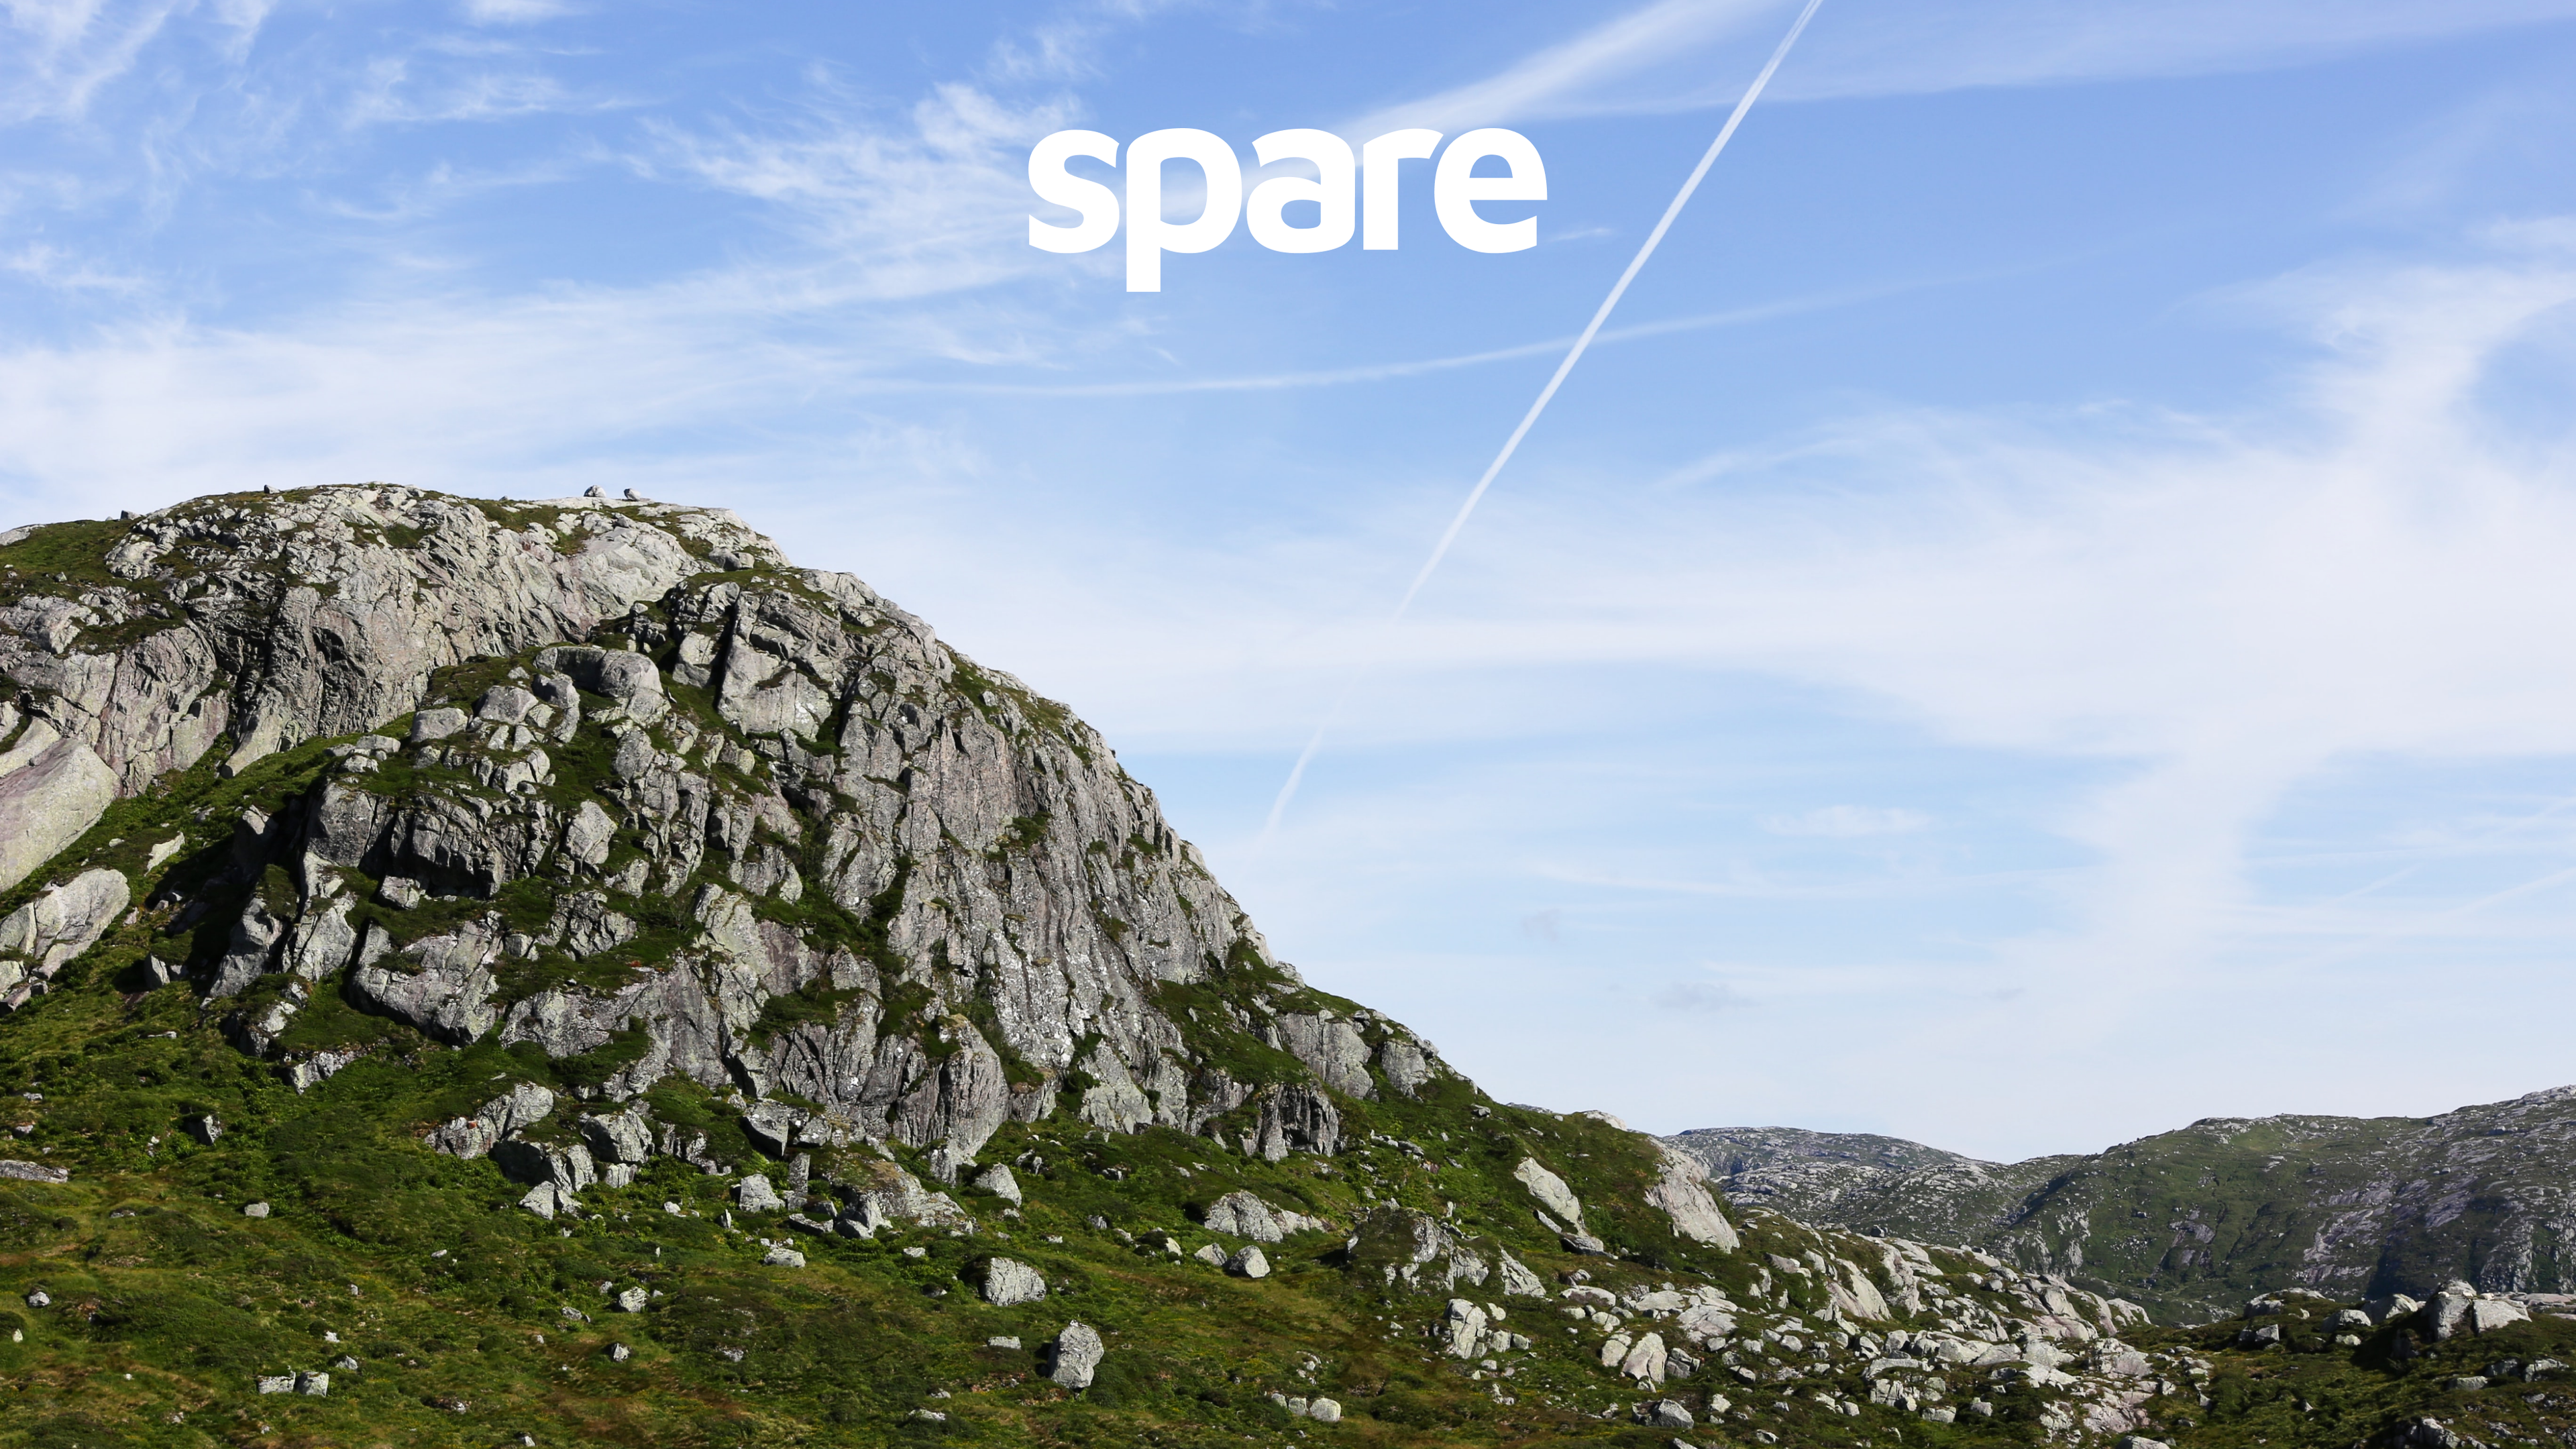 Gjesdal landscape with Spare logo